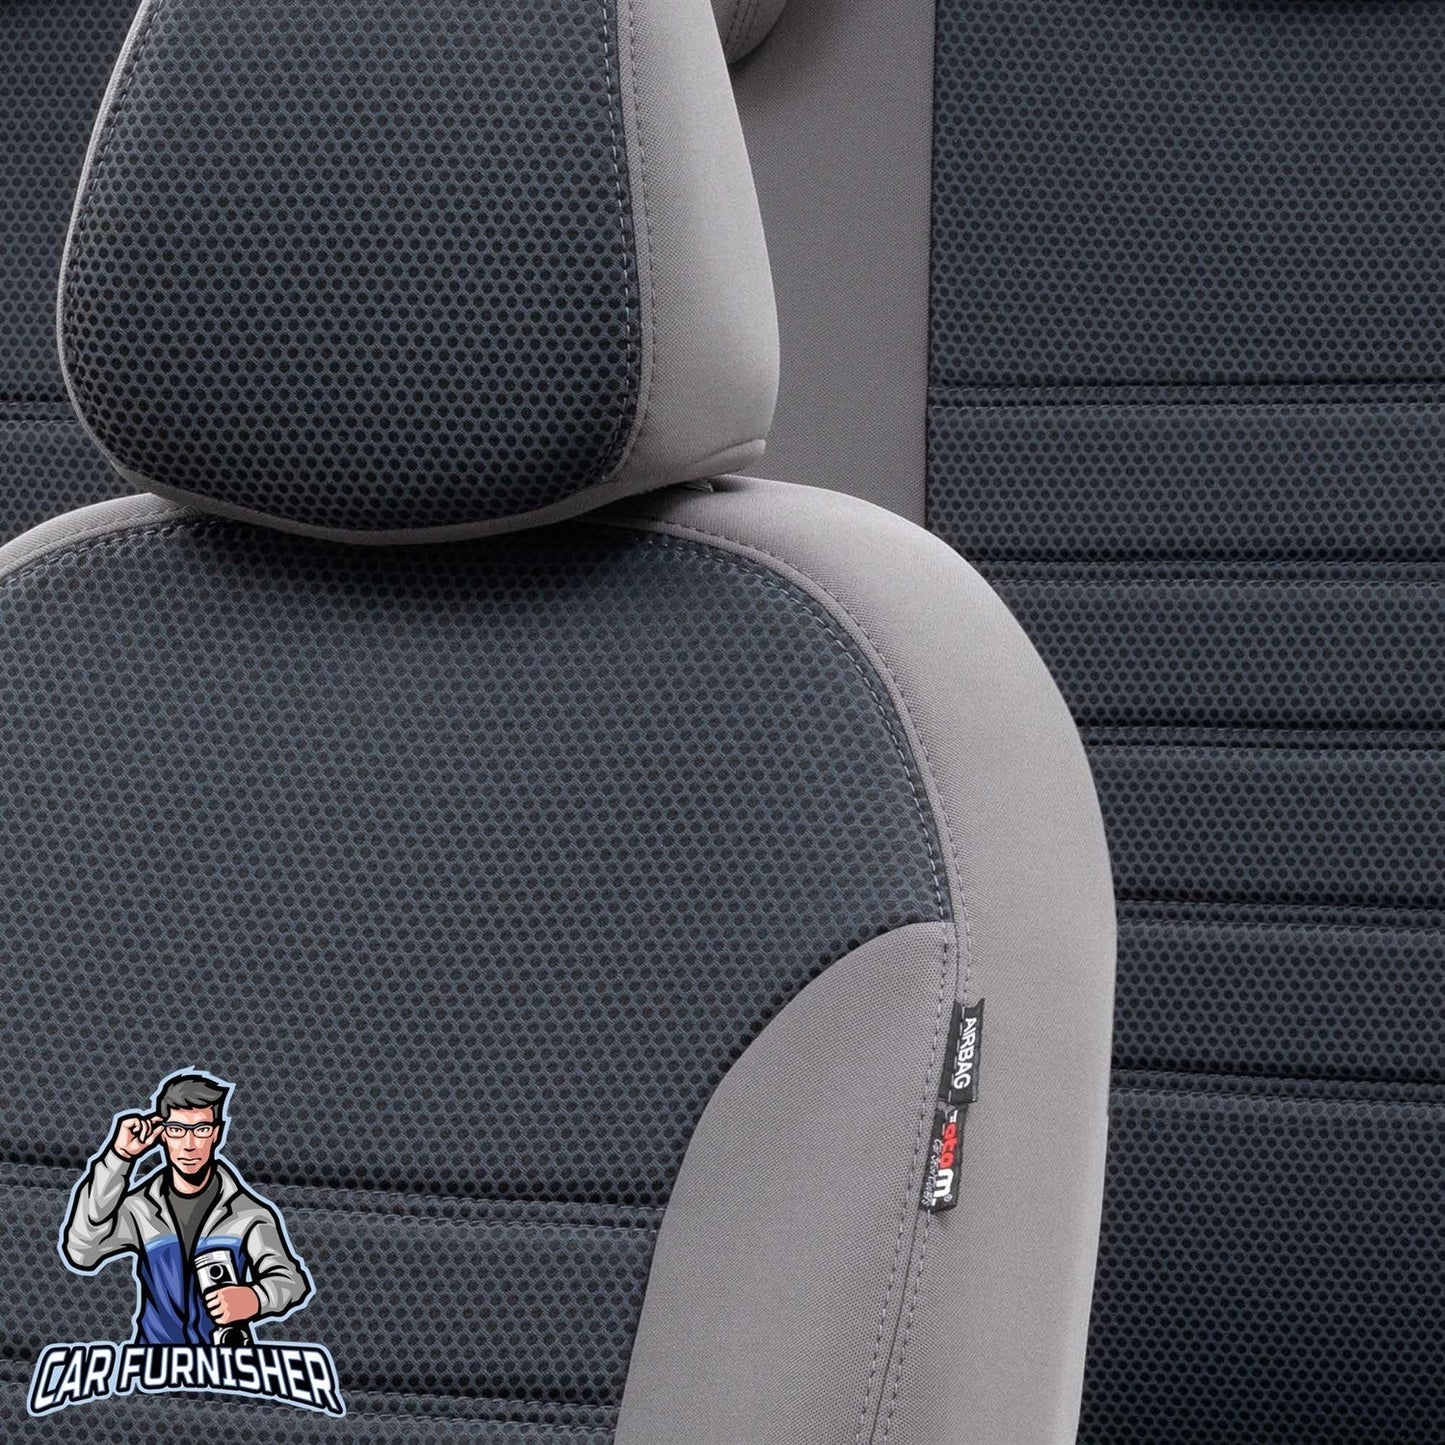 Seat Altea Seat Covers Original Jacquard Design Smoked Jacquard Fabric